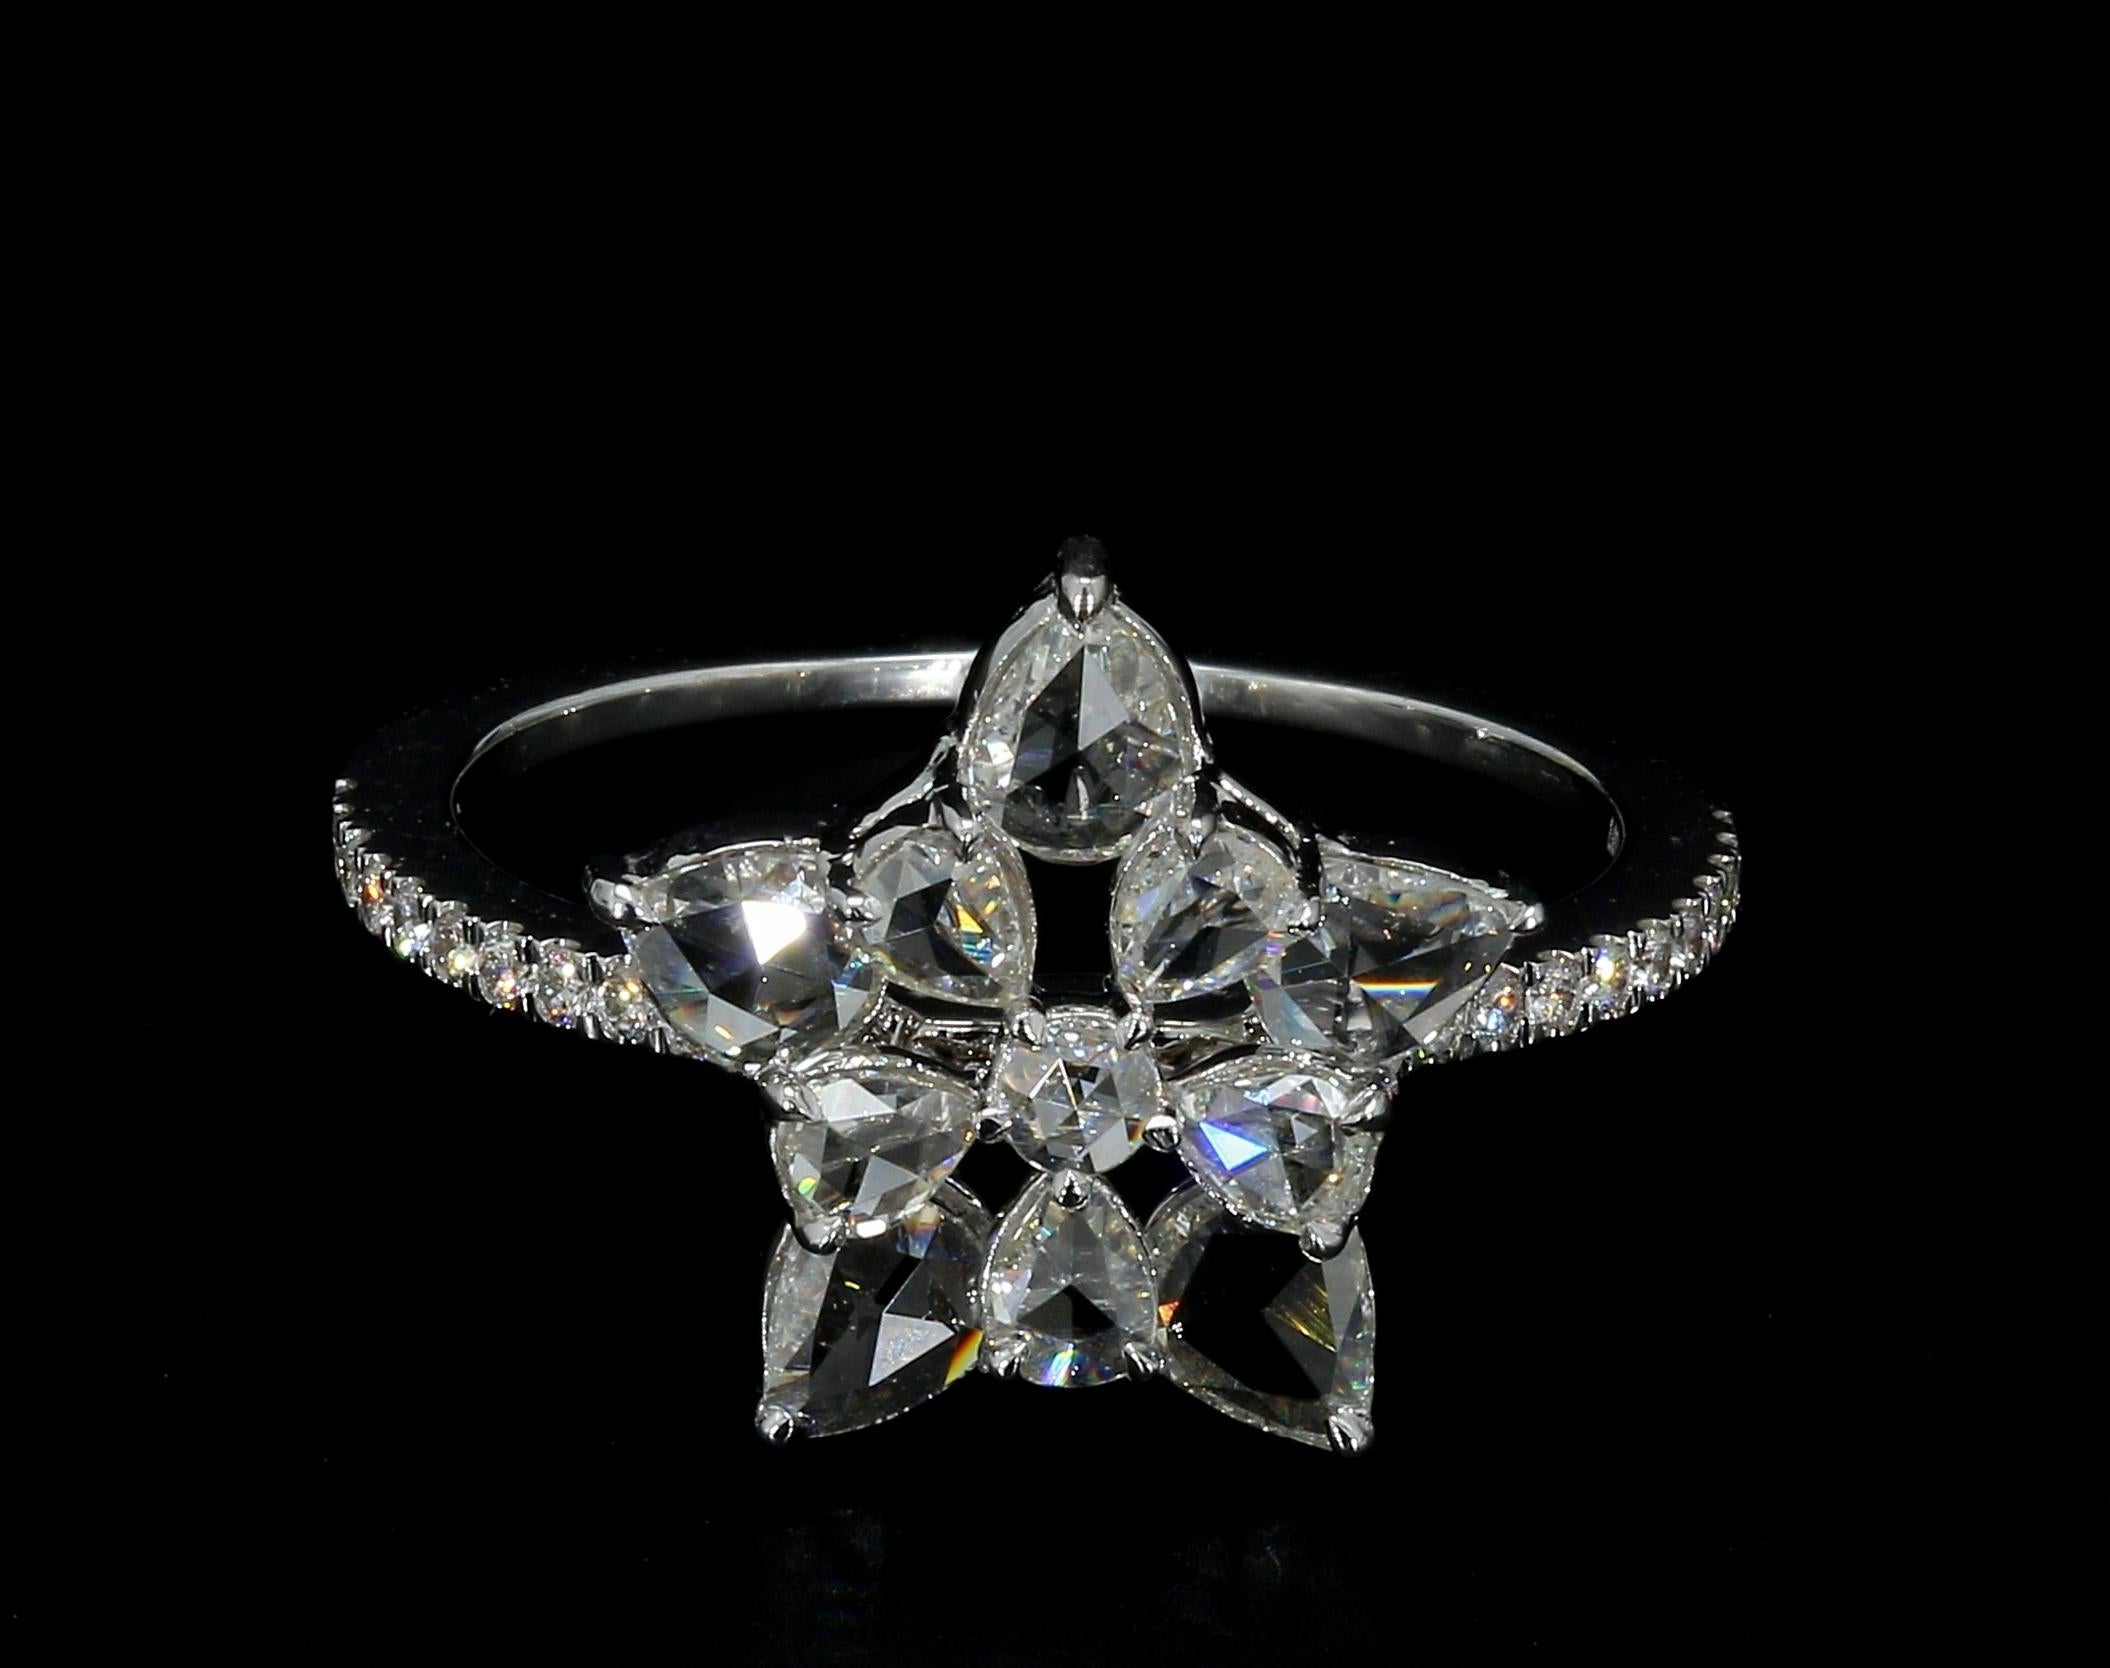 PANIM 1.14 Carat Diamond Rosecut 18K White Gold Snowflake Ring

Set in 18K White Gold with Pear Shape Rosecuts.

Contact us on this platform to get more details